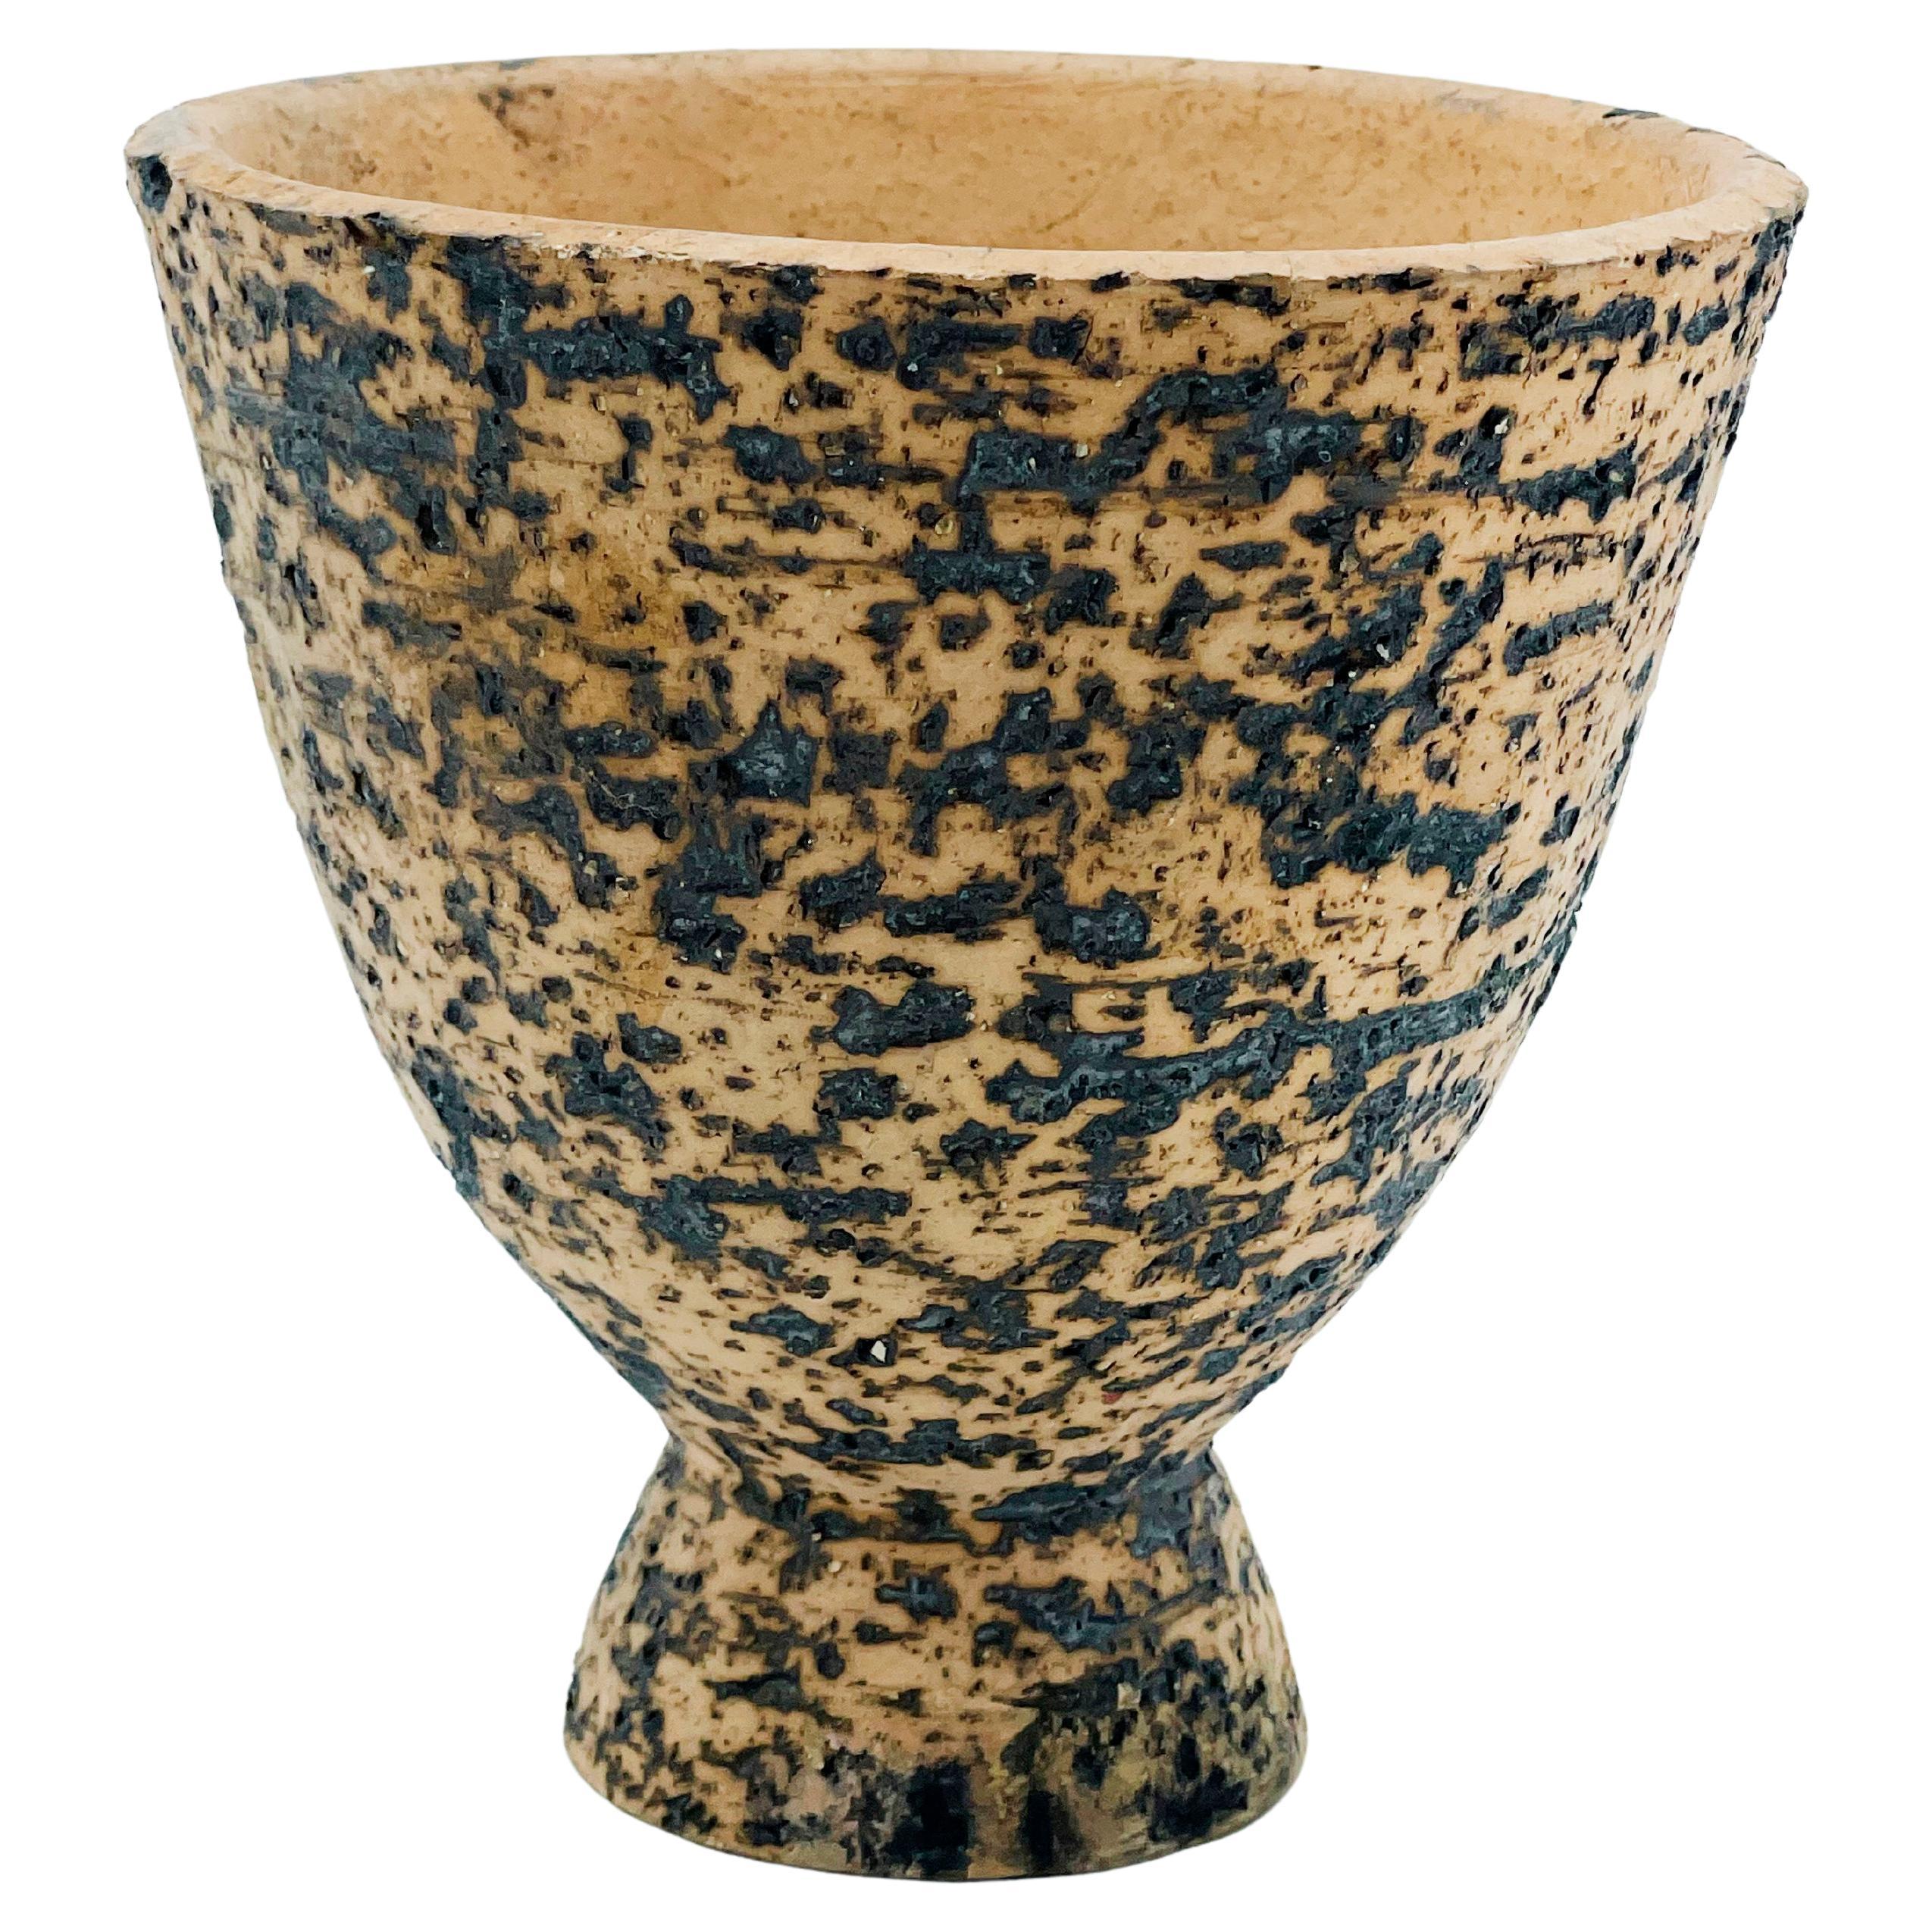 Jean Besnard Art Deco Ceramic Vase 1930 20th Century Design For Sale